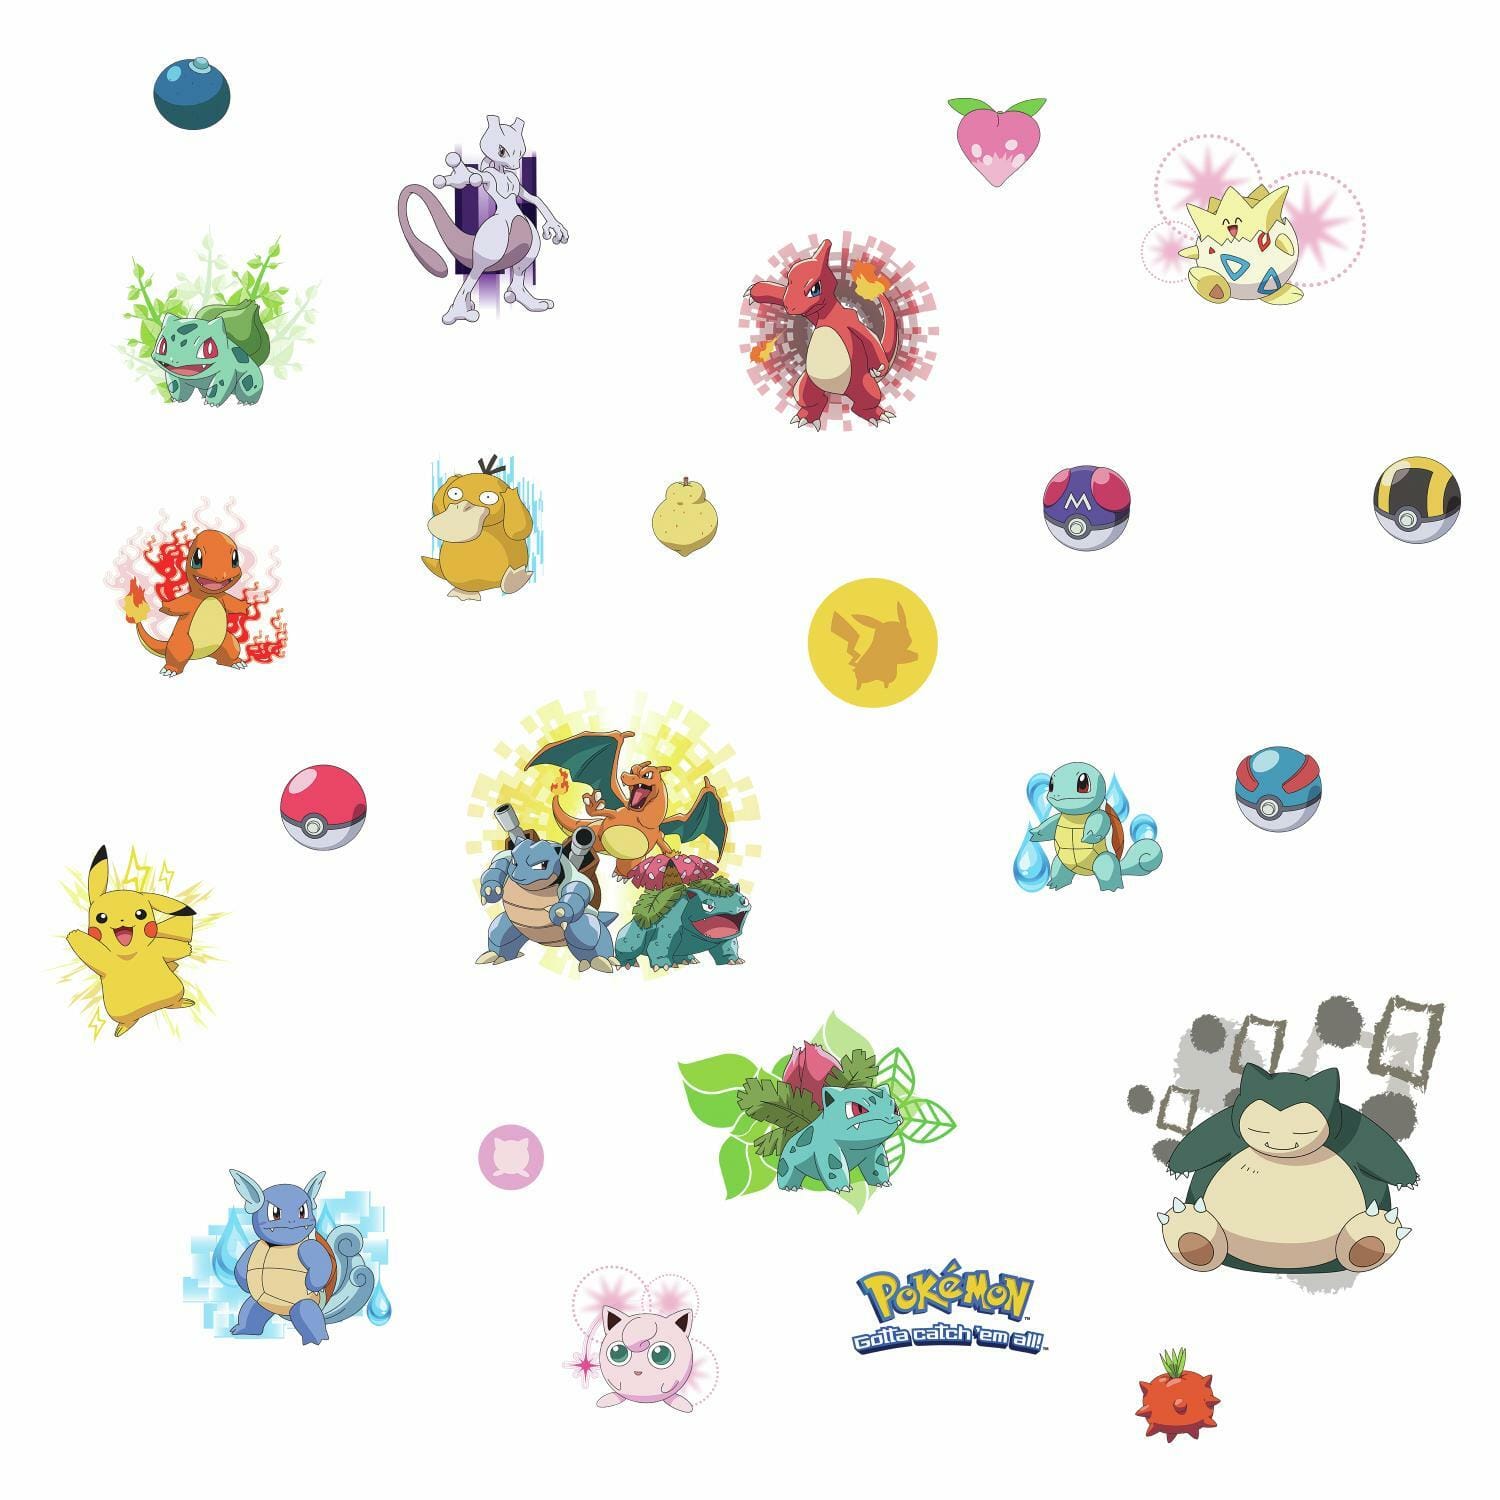 Stickers muraux Pokémon Iconic - RoomMates